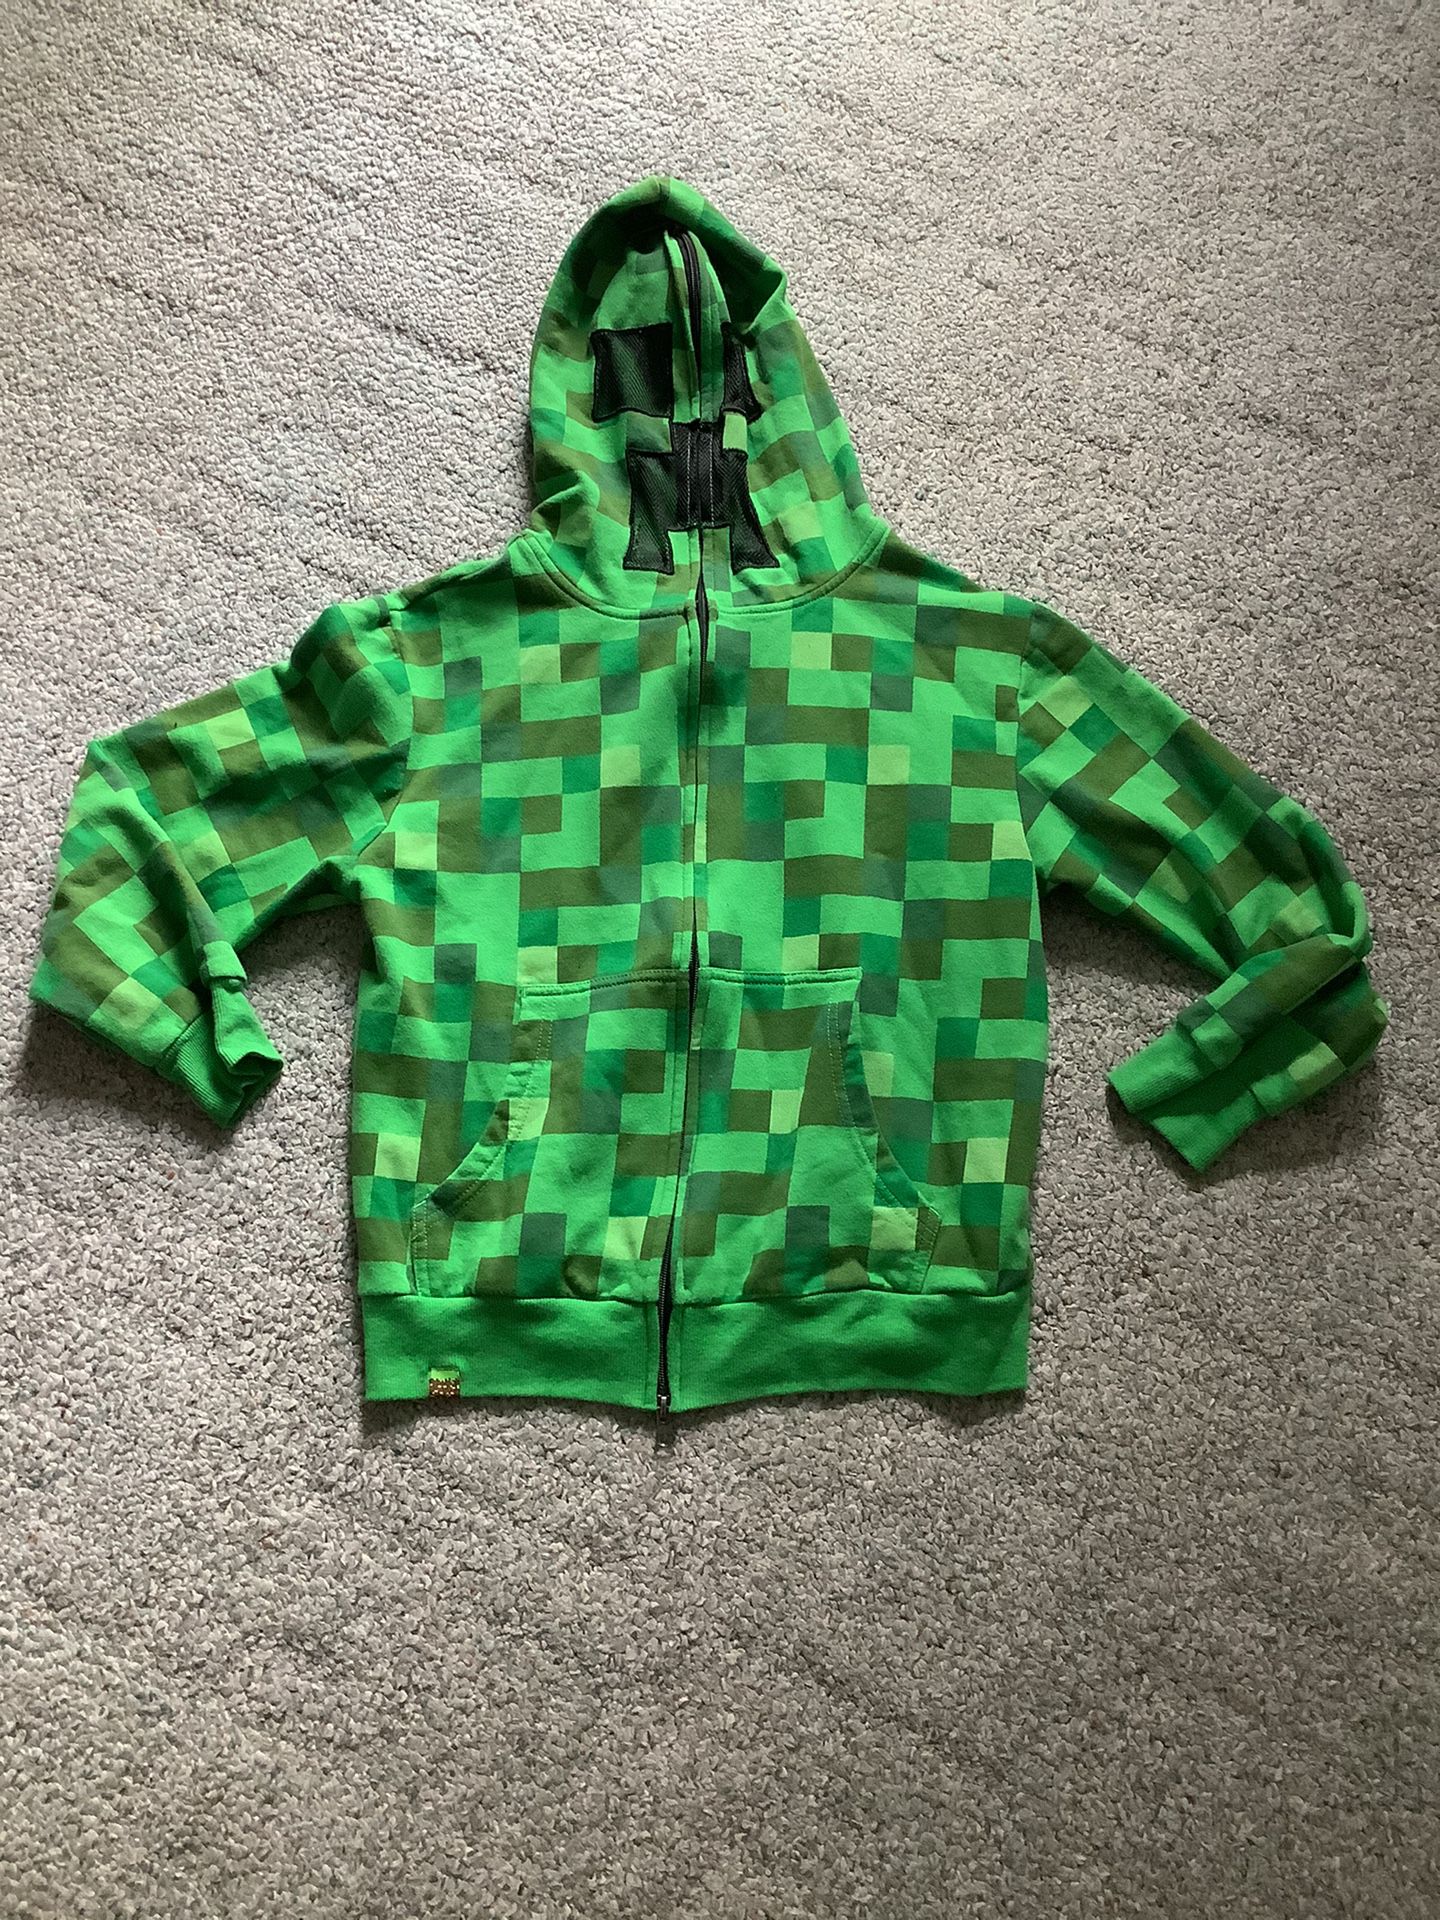 Boys' Minecraft Creeper Costume Fleece Sweatshirt - Green